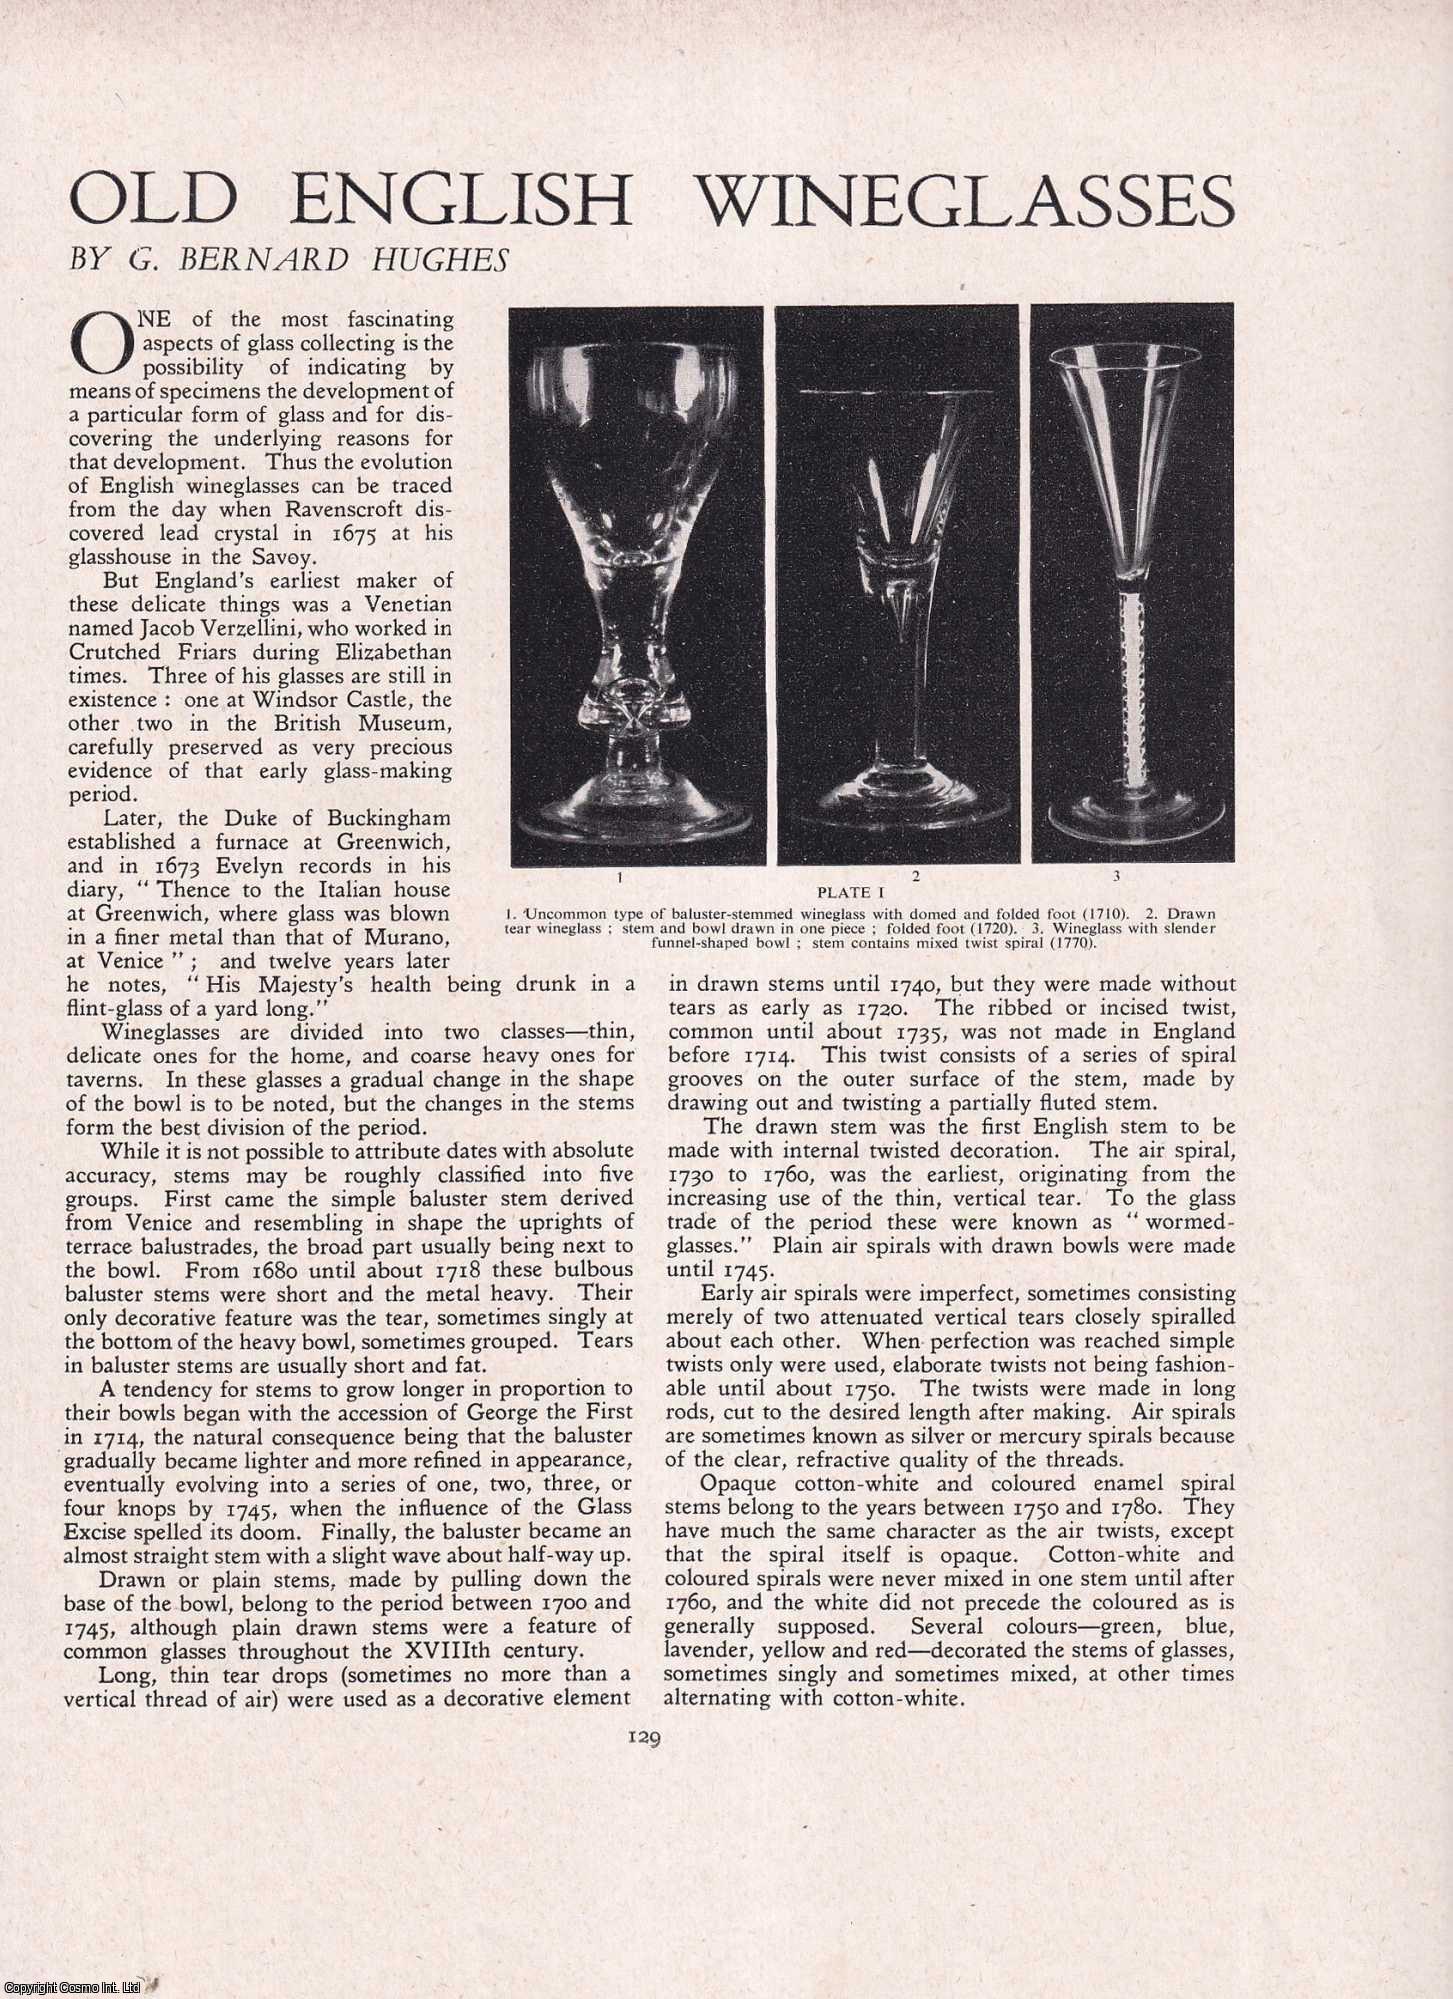 G. Bernard Hughes - Old English Wineglasses. An original article from Apollo, International Magazine of the Arts, 1942.